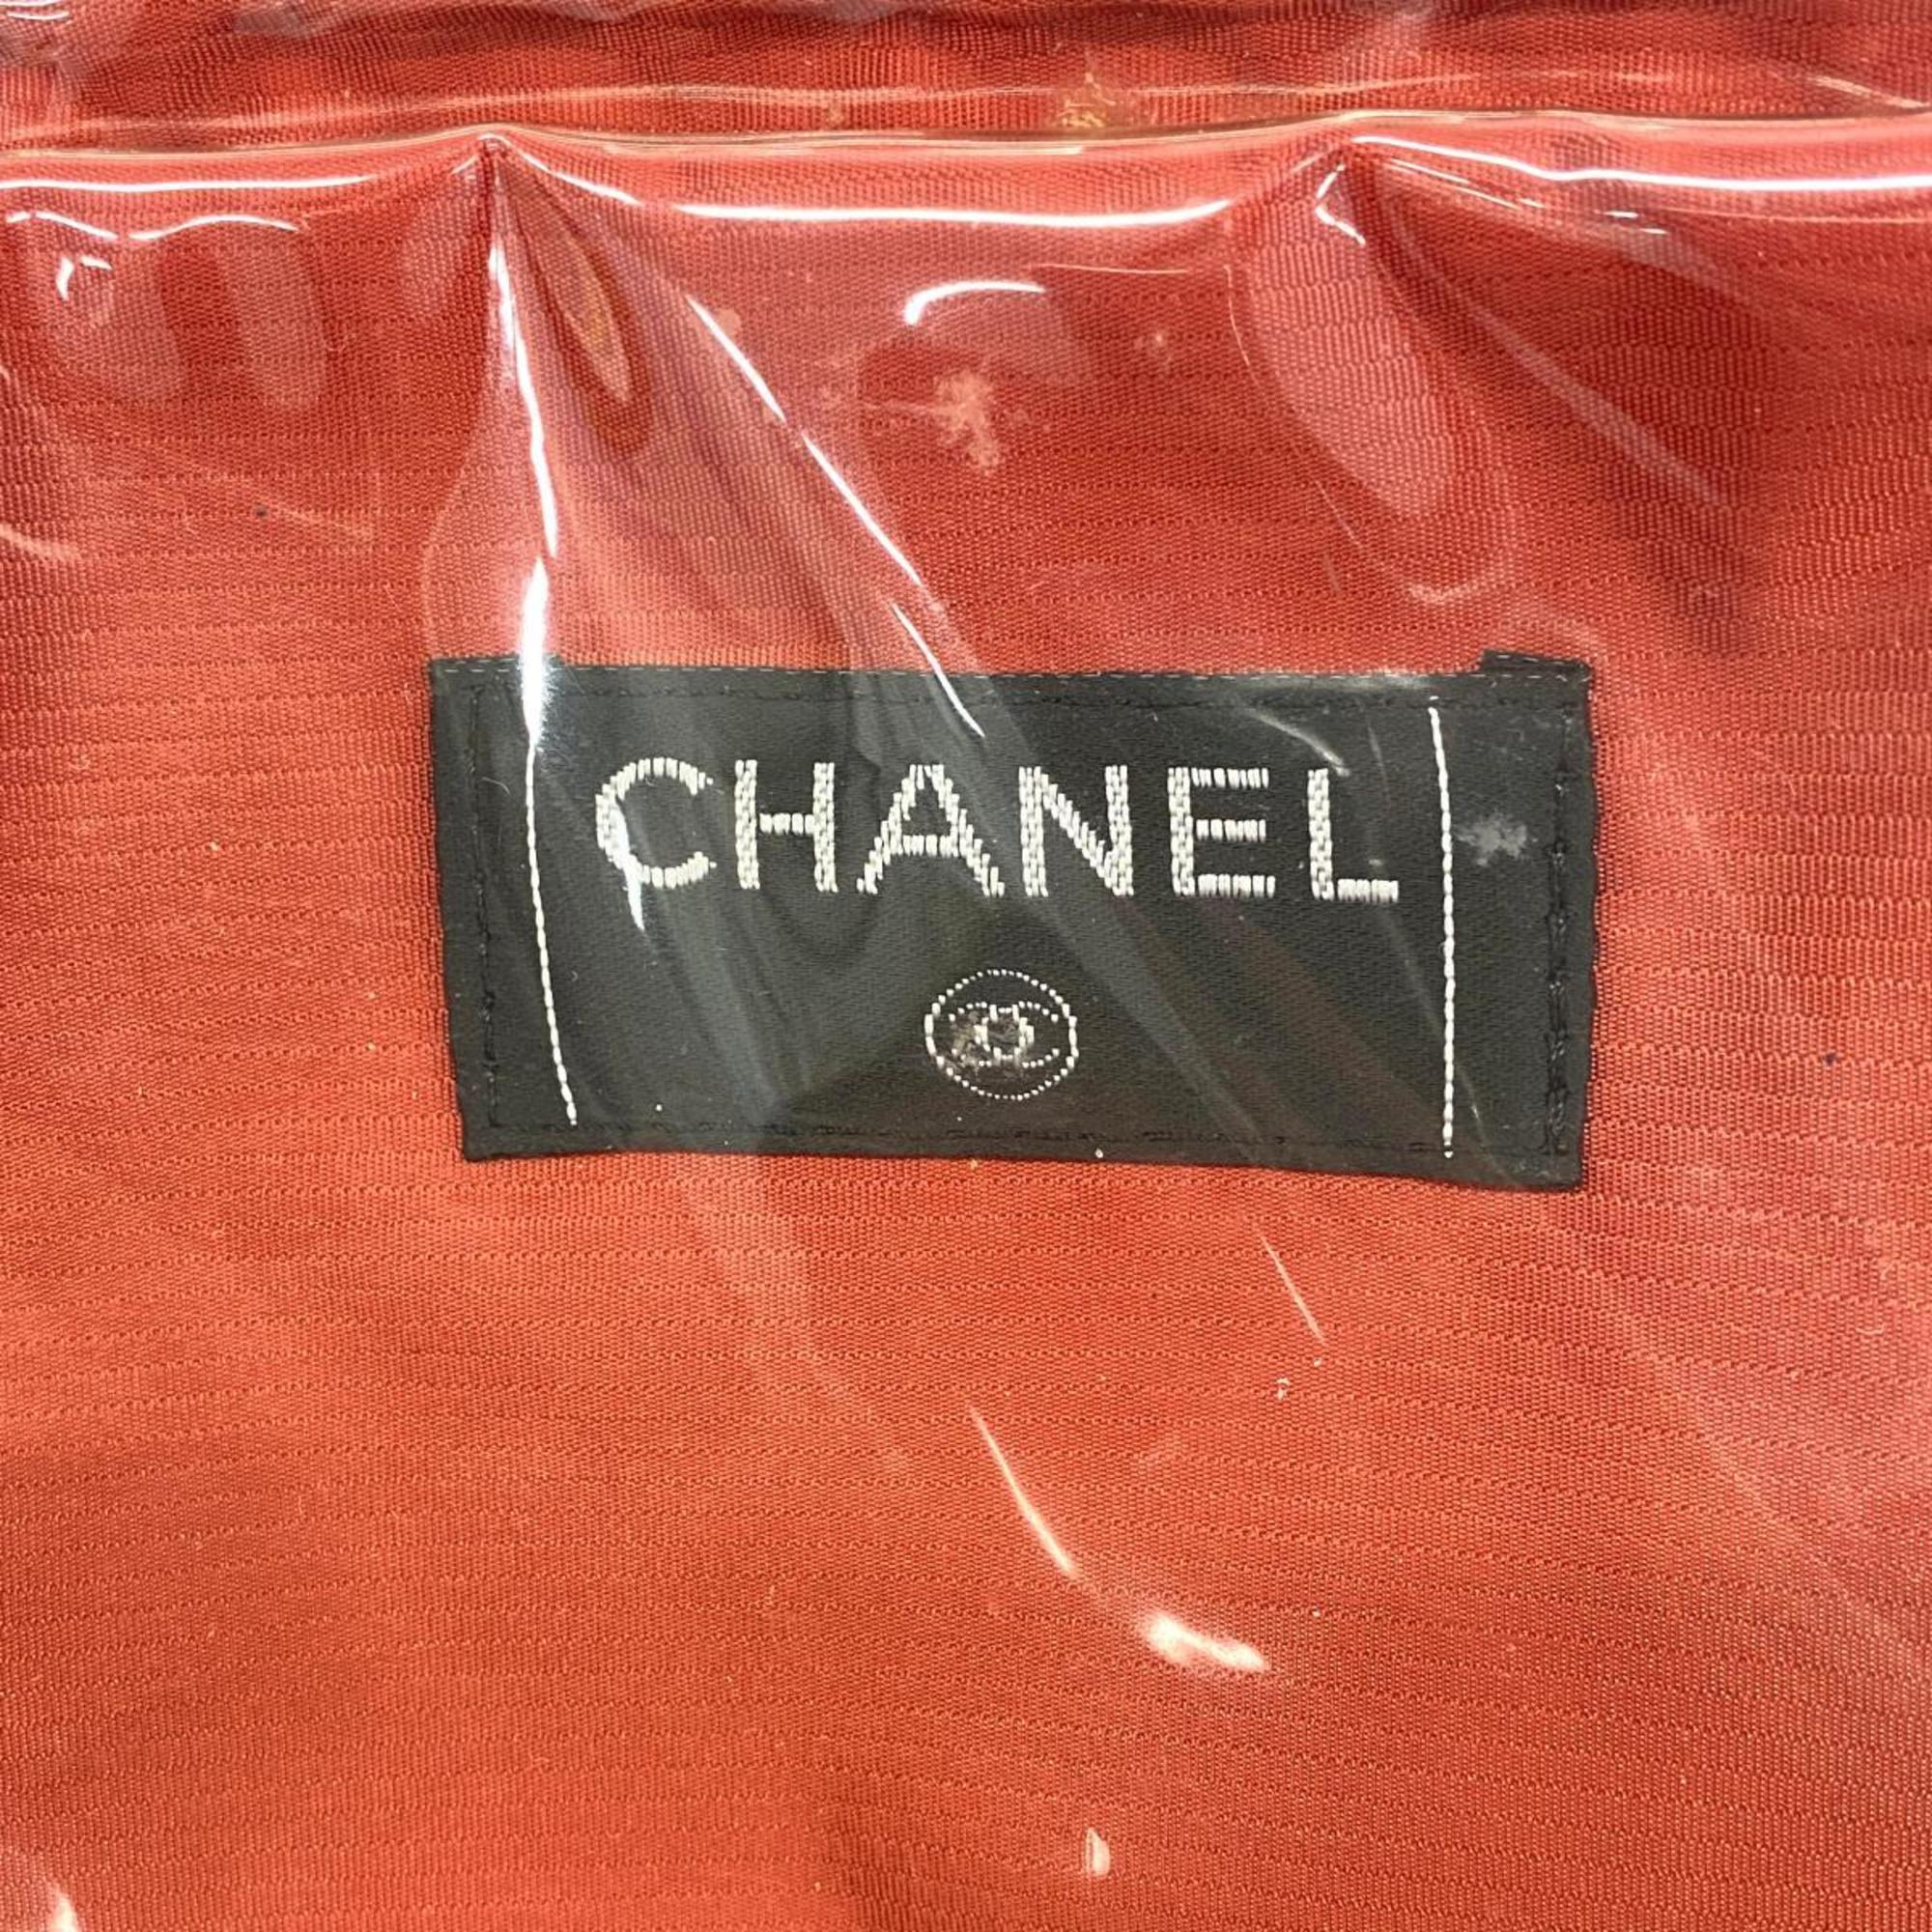 Chanel Tote Bag Travel Nylon Black Women's